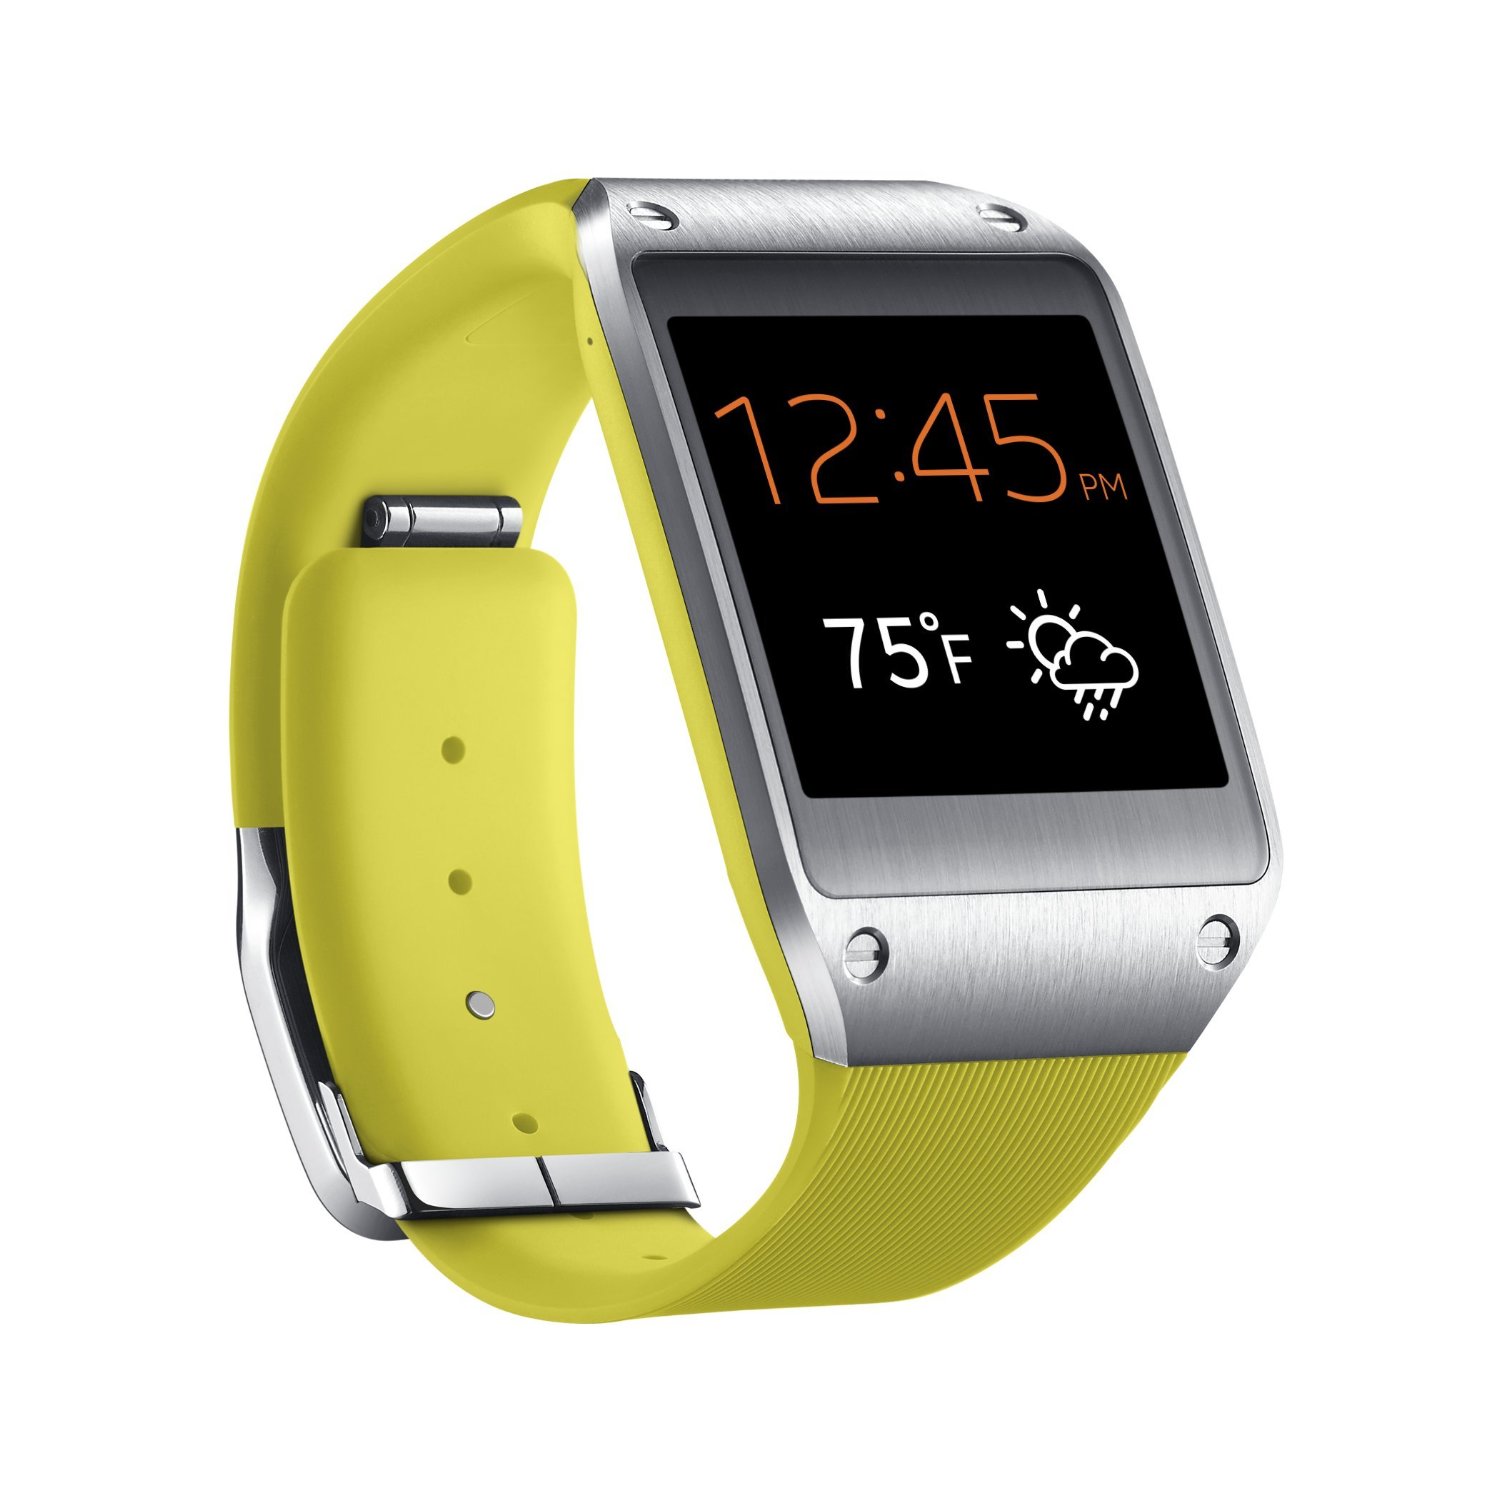 Samsung Galaxy Smart Watch Users Guide